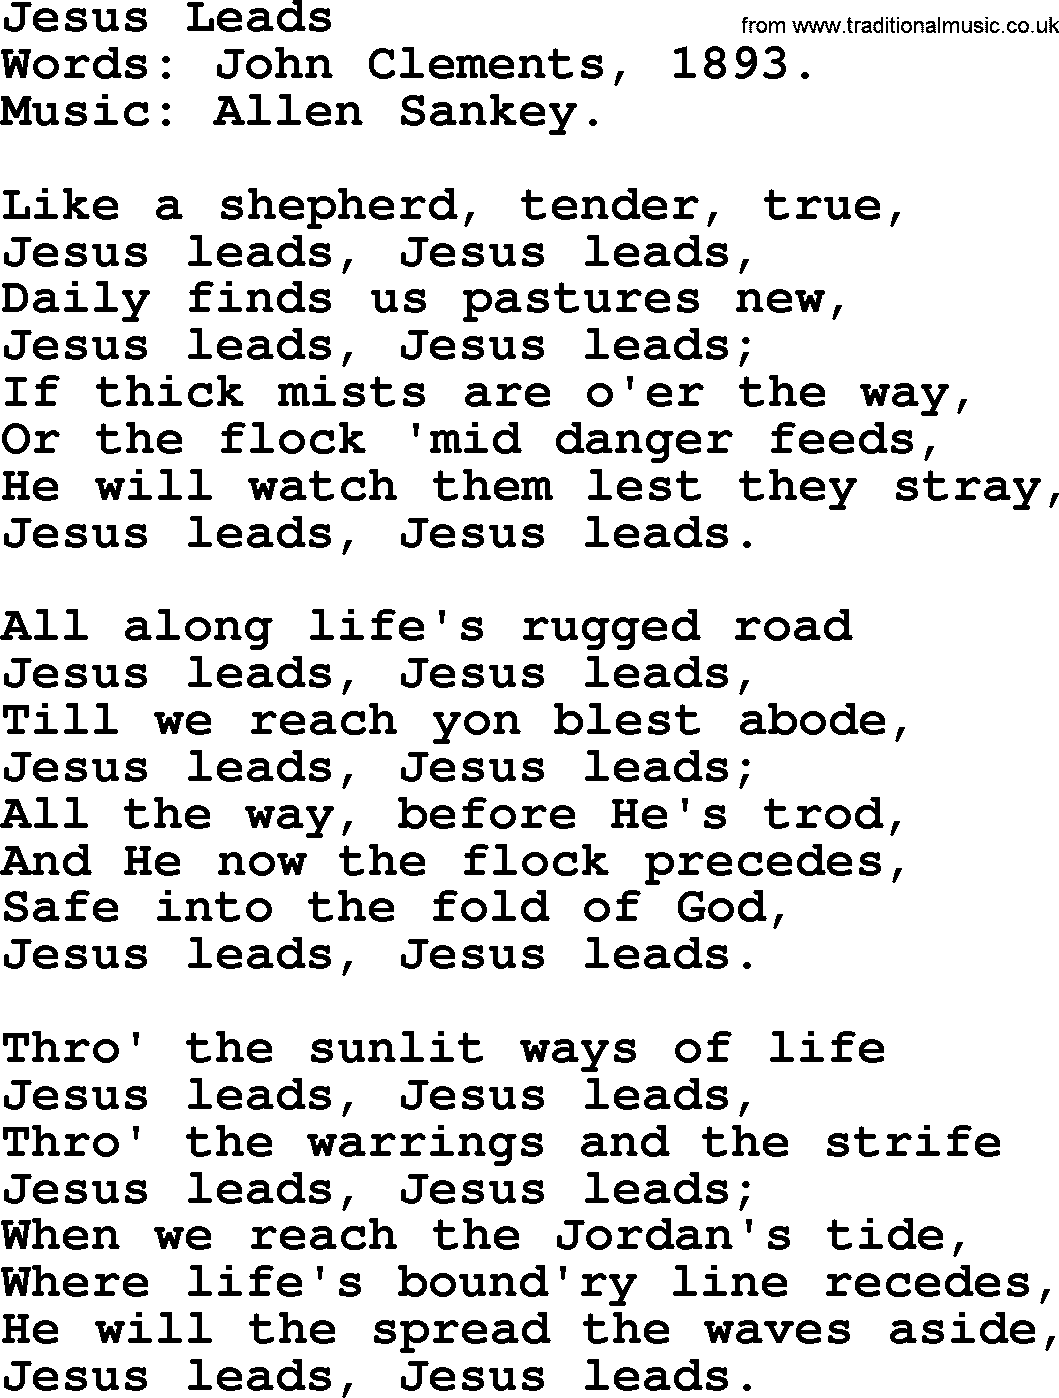 Ira Sankey hymn: Jesus Leads-Ira Sankey, lyrics